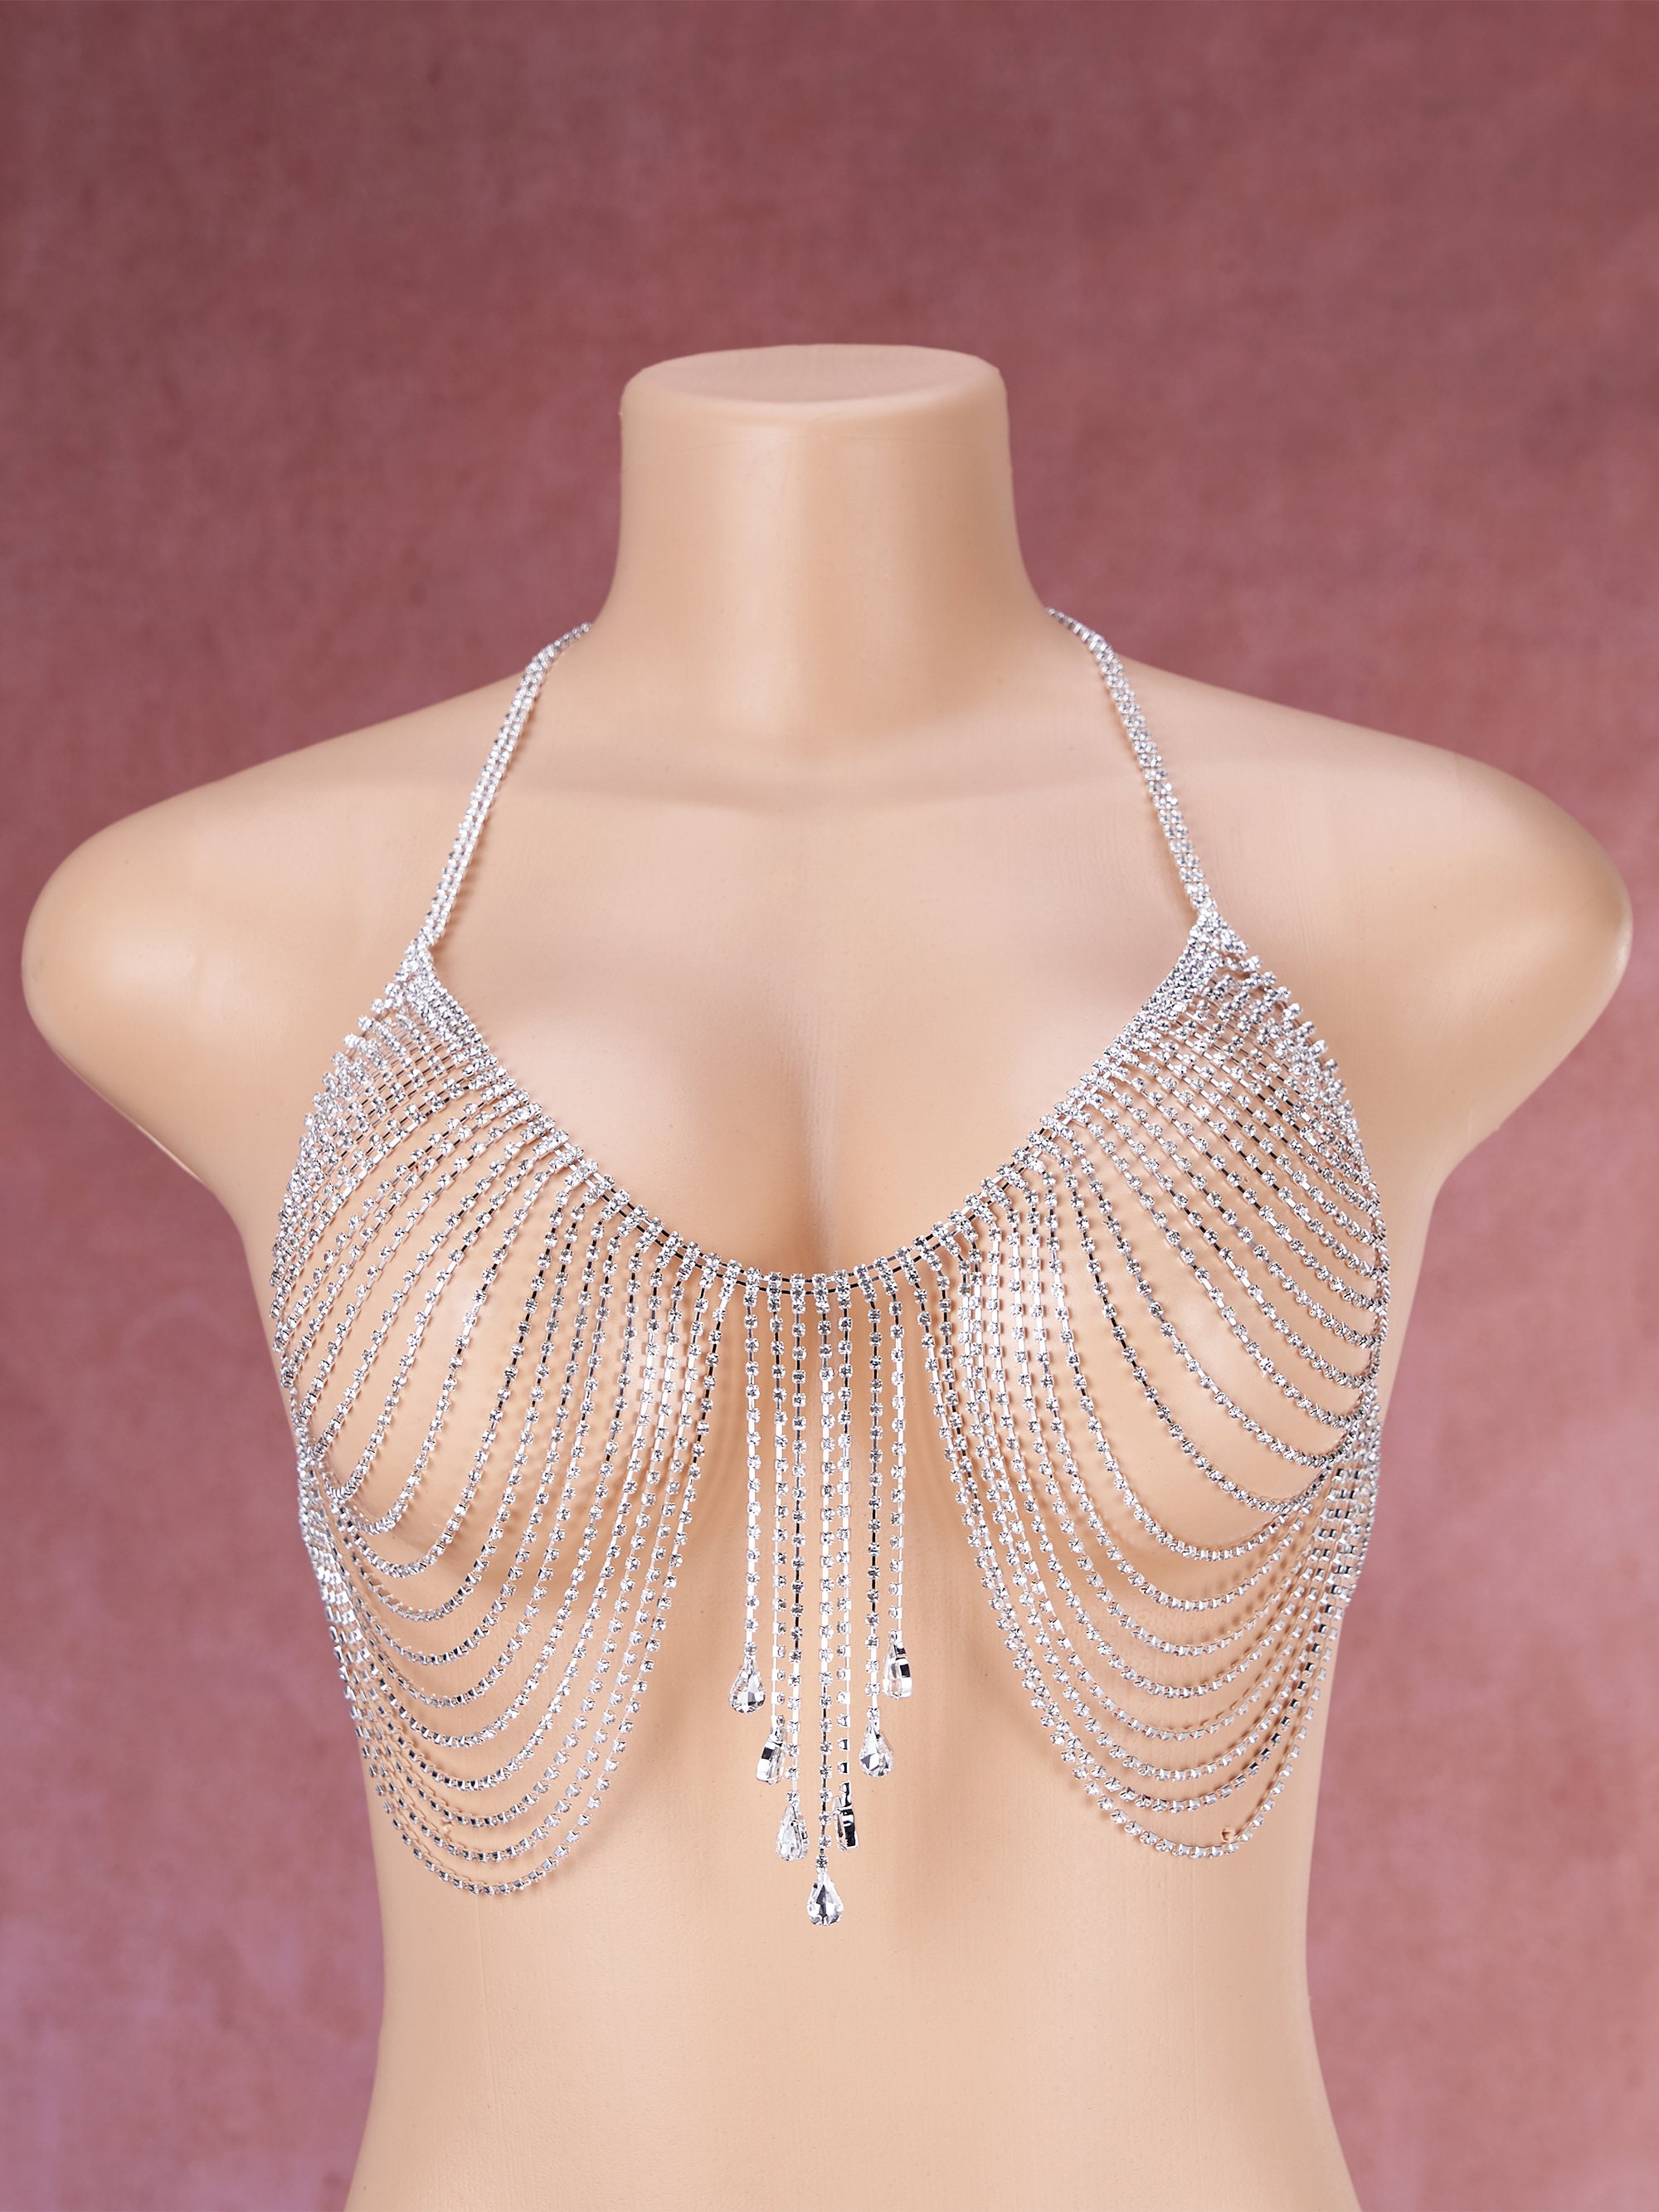 14k Gold Chain Bra Chain Bralette Chain Halter Top Gypsy Bikini